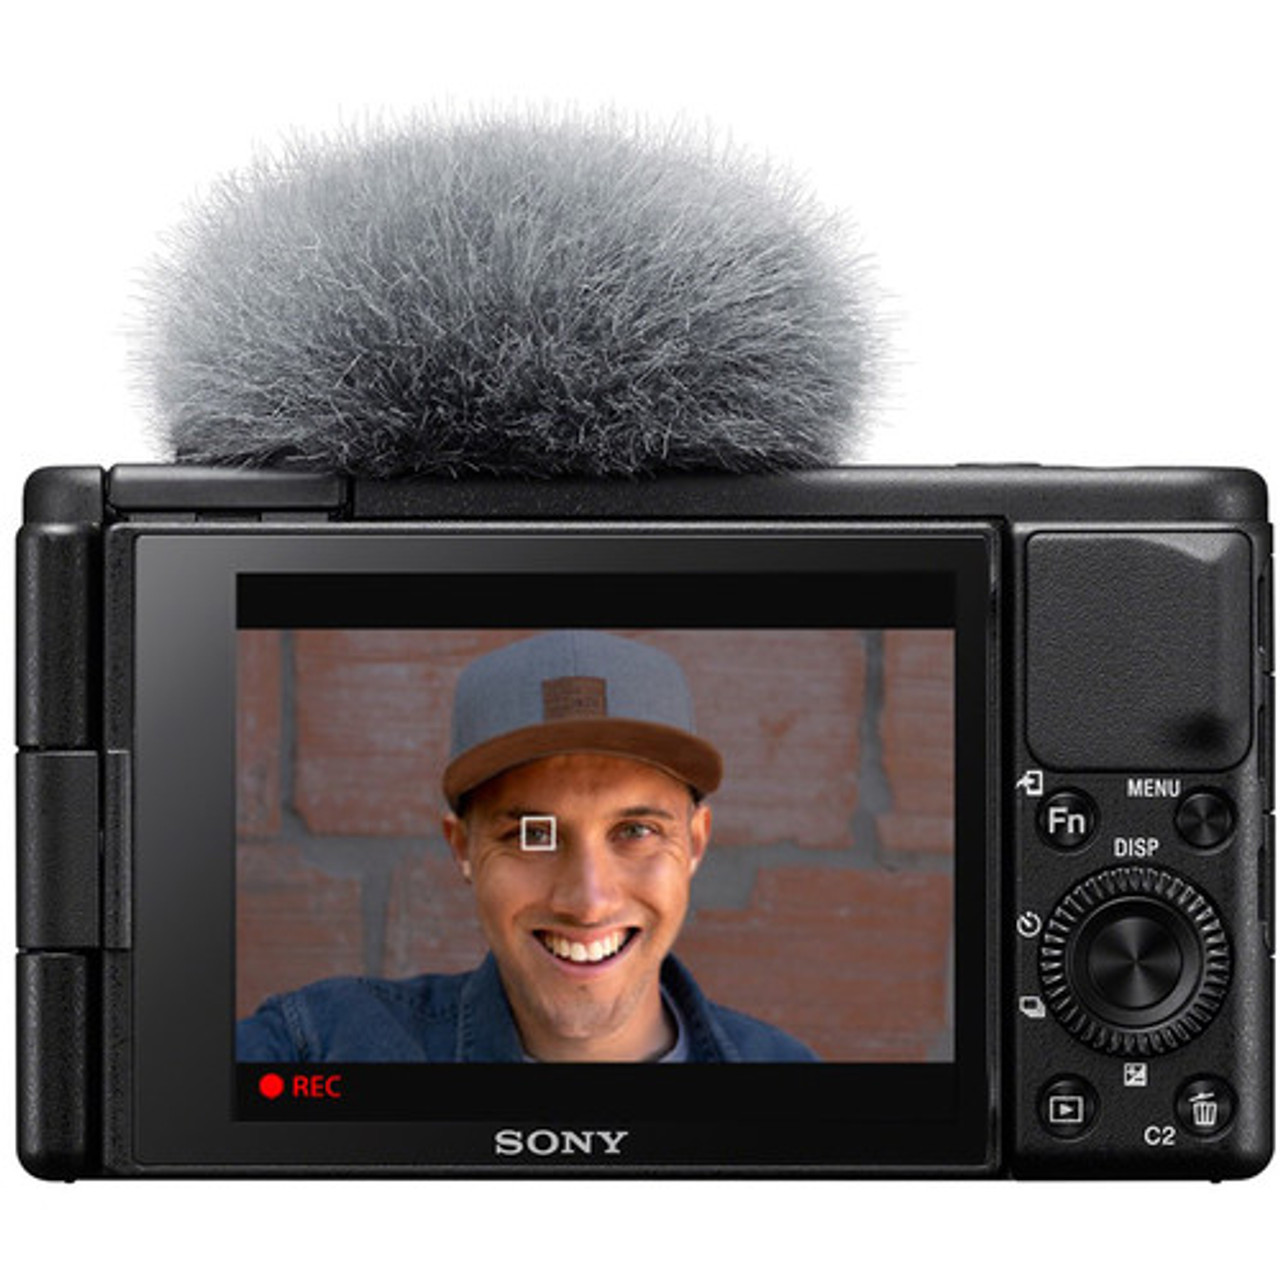 Sony ZV-1F 20.1MP Vlogging Camera - Black for sale online